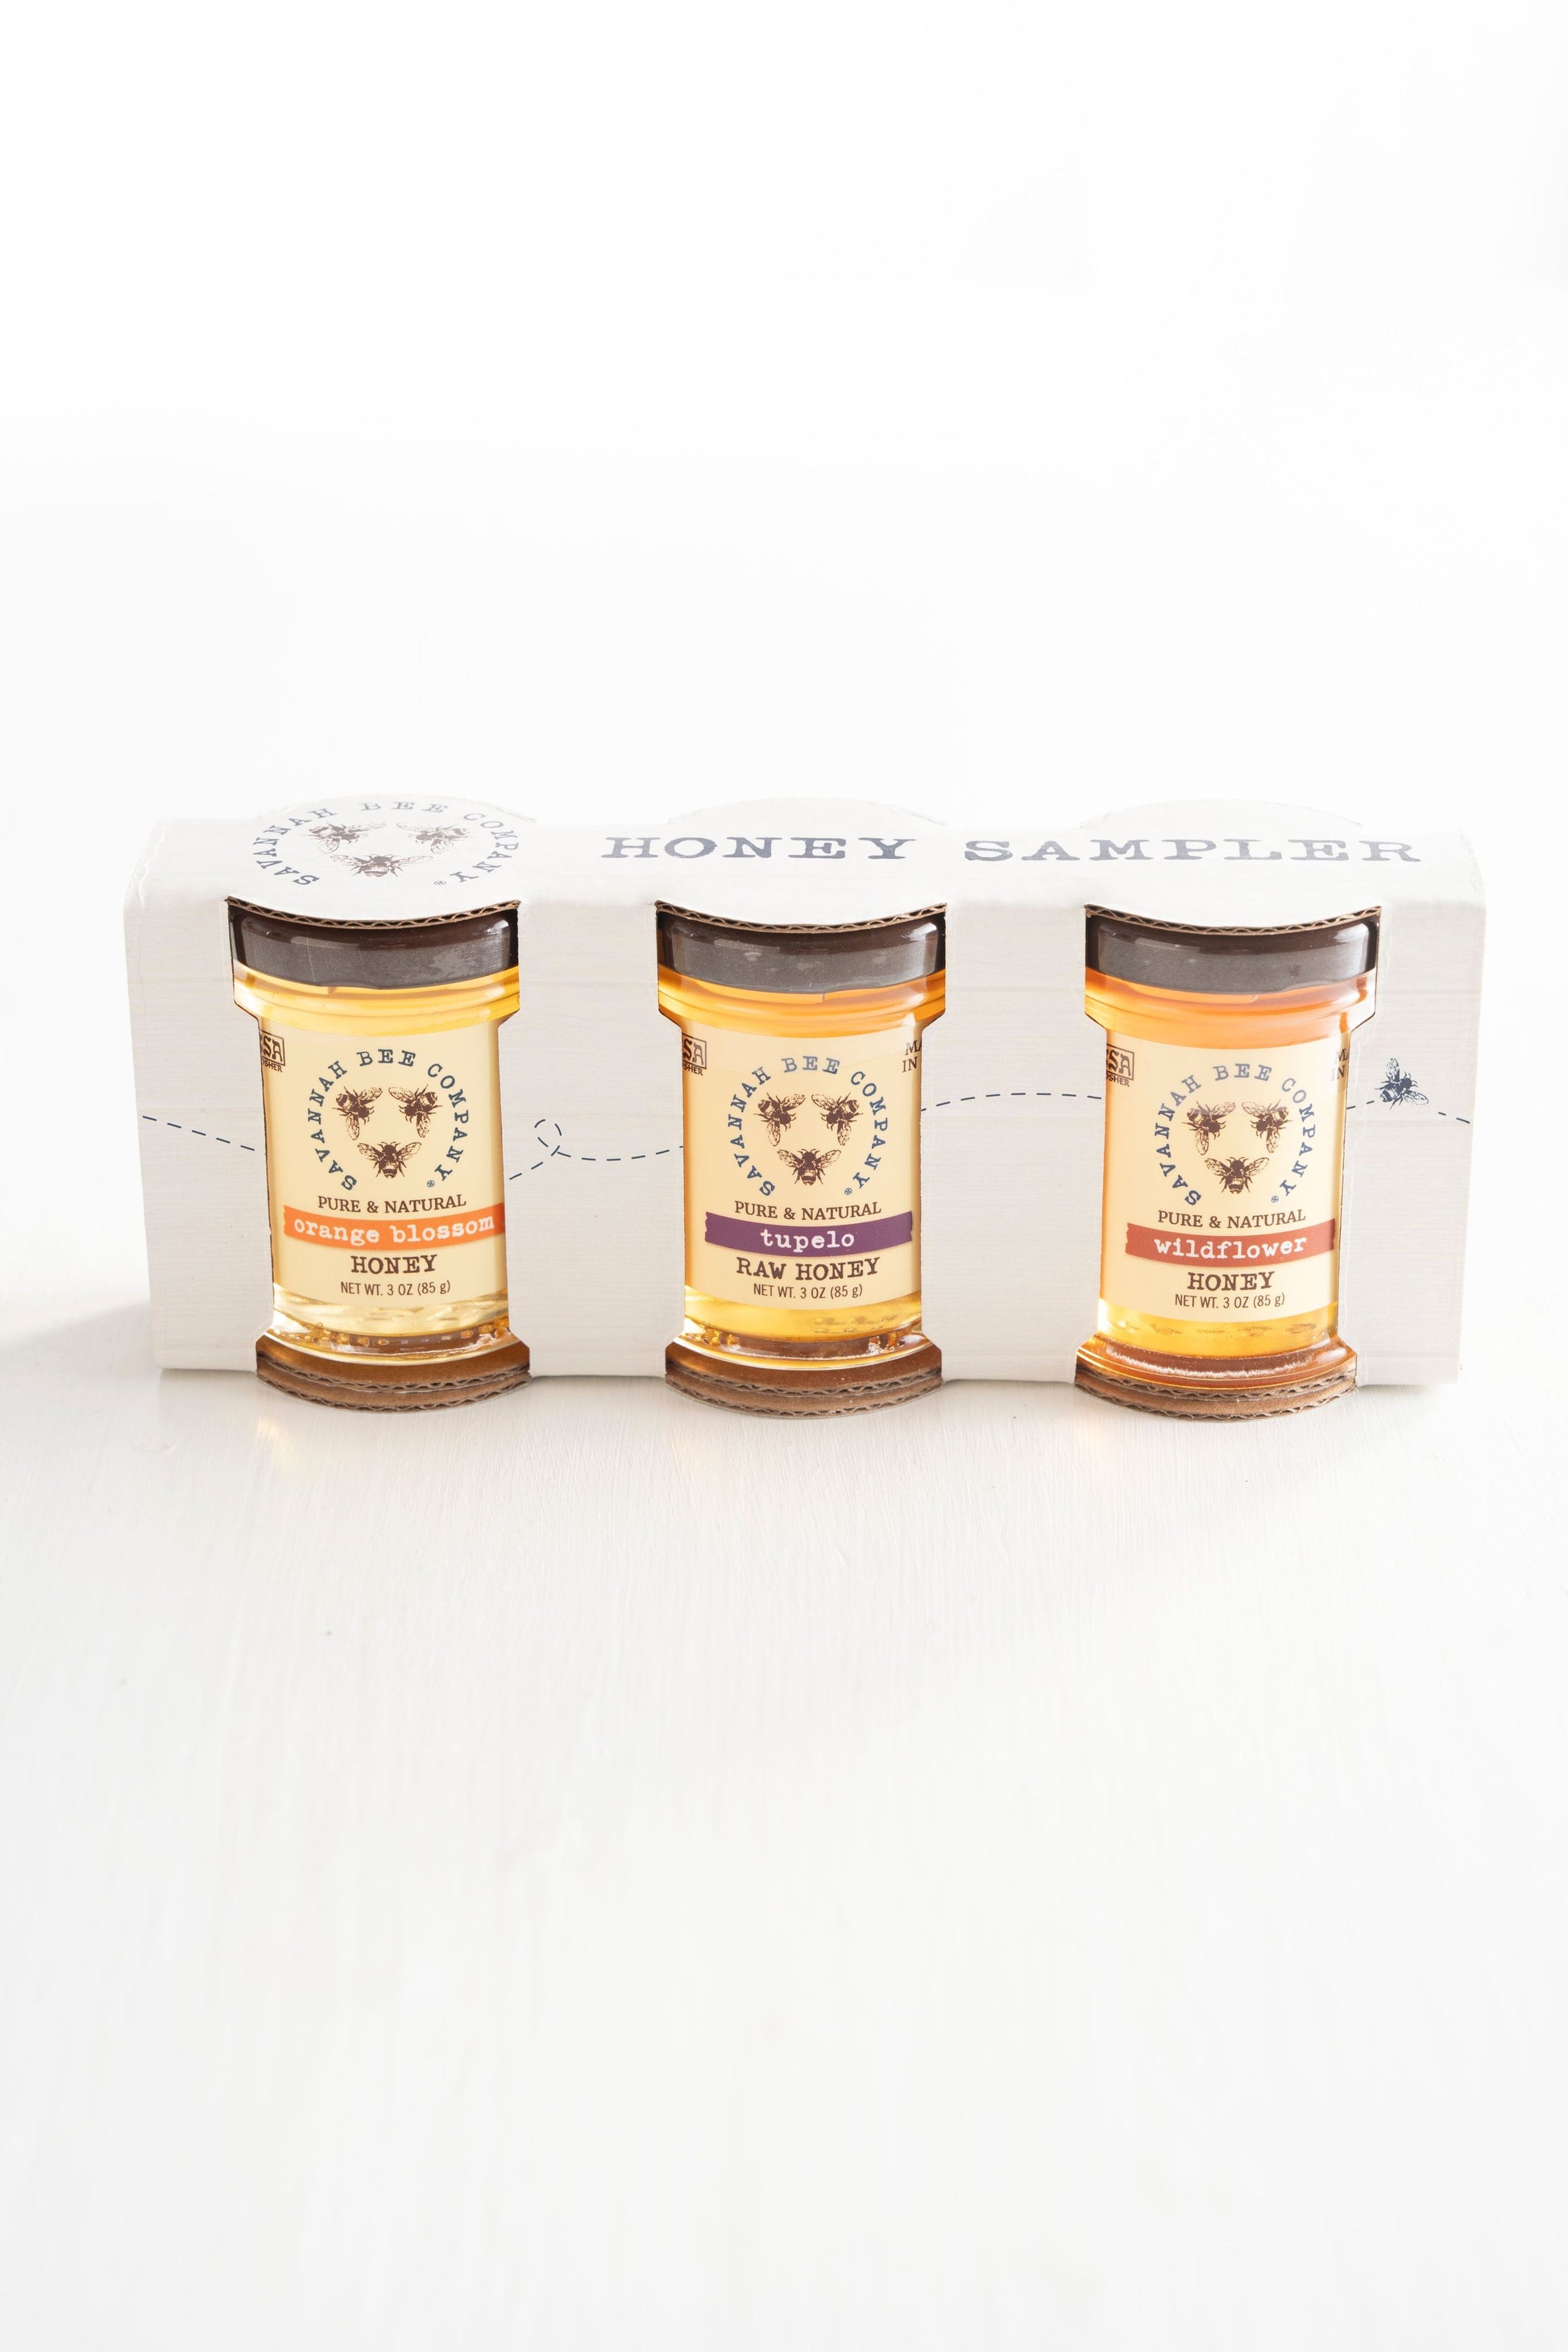 The Southern Sample Set includes 3 ounce jars of Georgia Wildflower Honey, Florida Orange Blossom Honey, and Tupelo Honey.